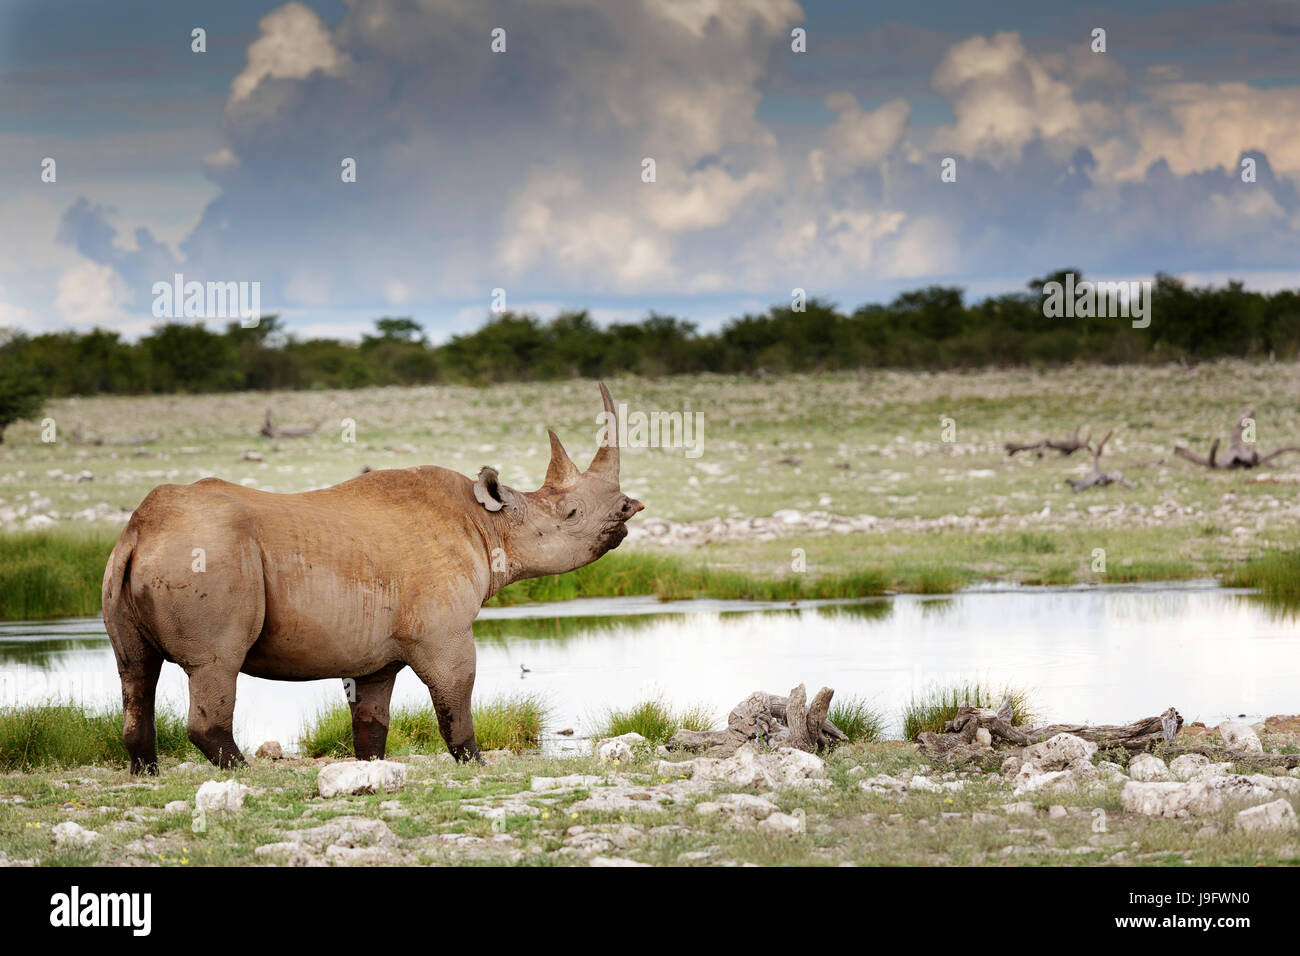 Rhino standing by a water hole, Etosha NP, Namibia. Stock Photo